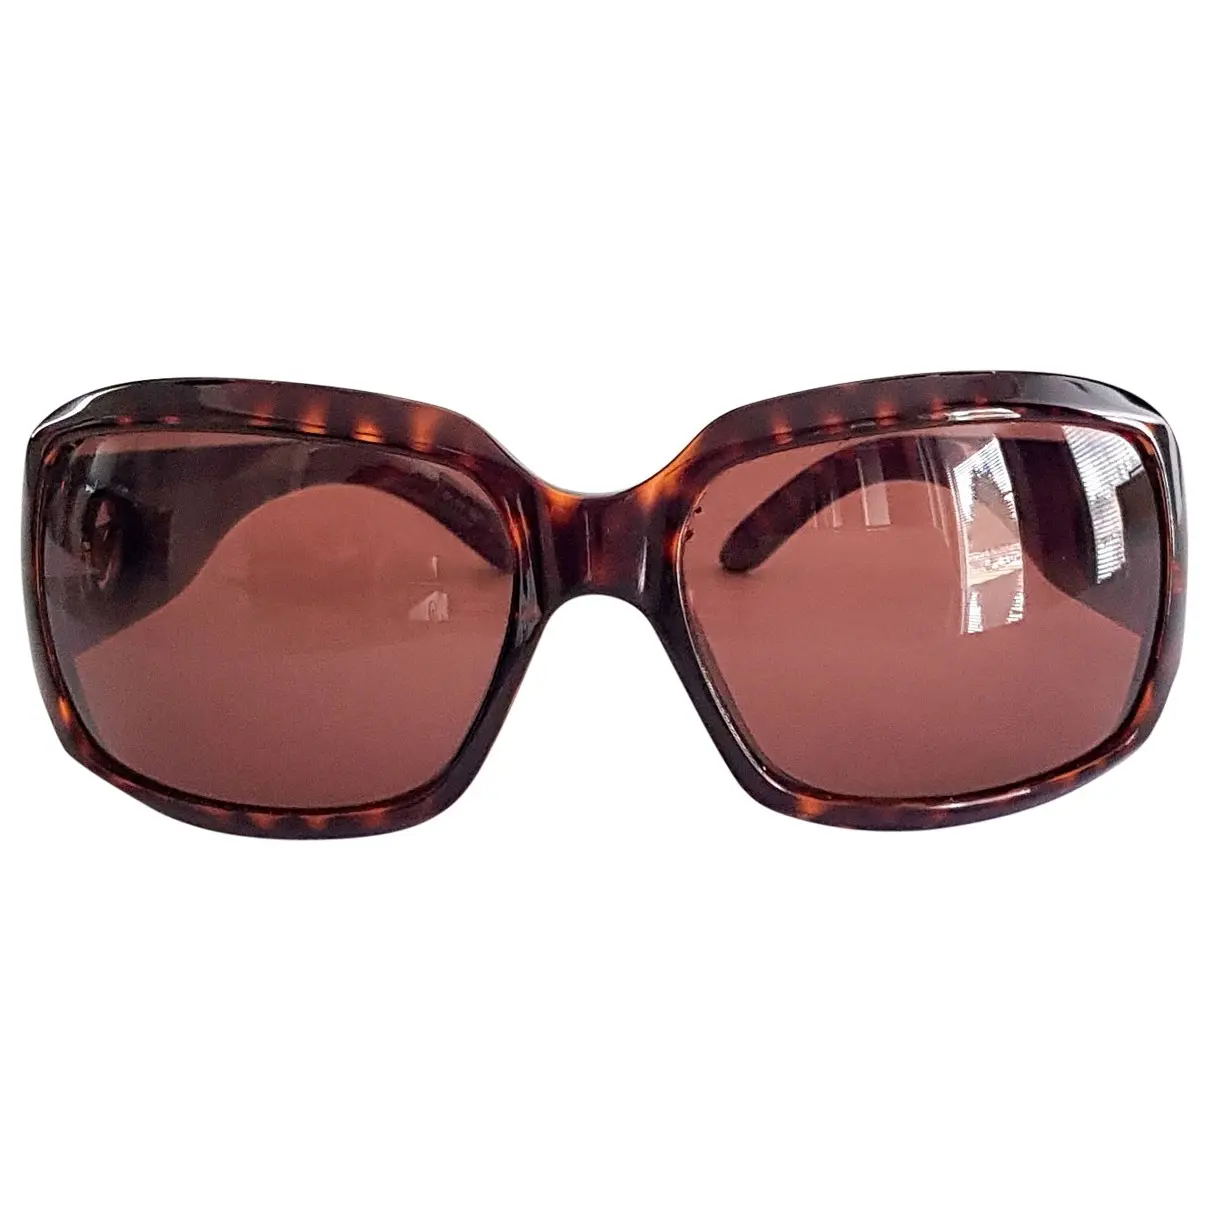 Oversized sunglasses Emporio Armani - Vintage